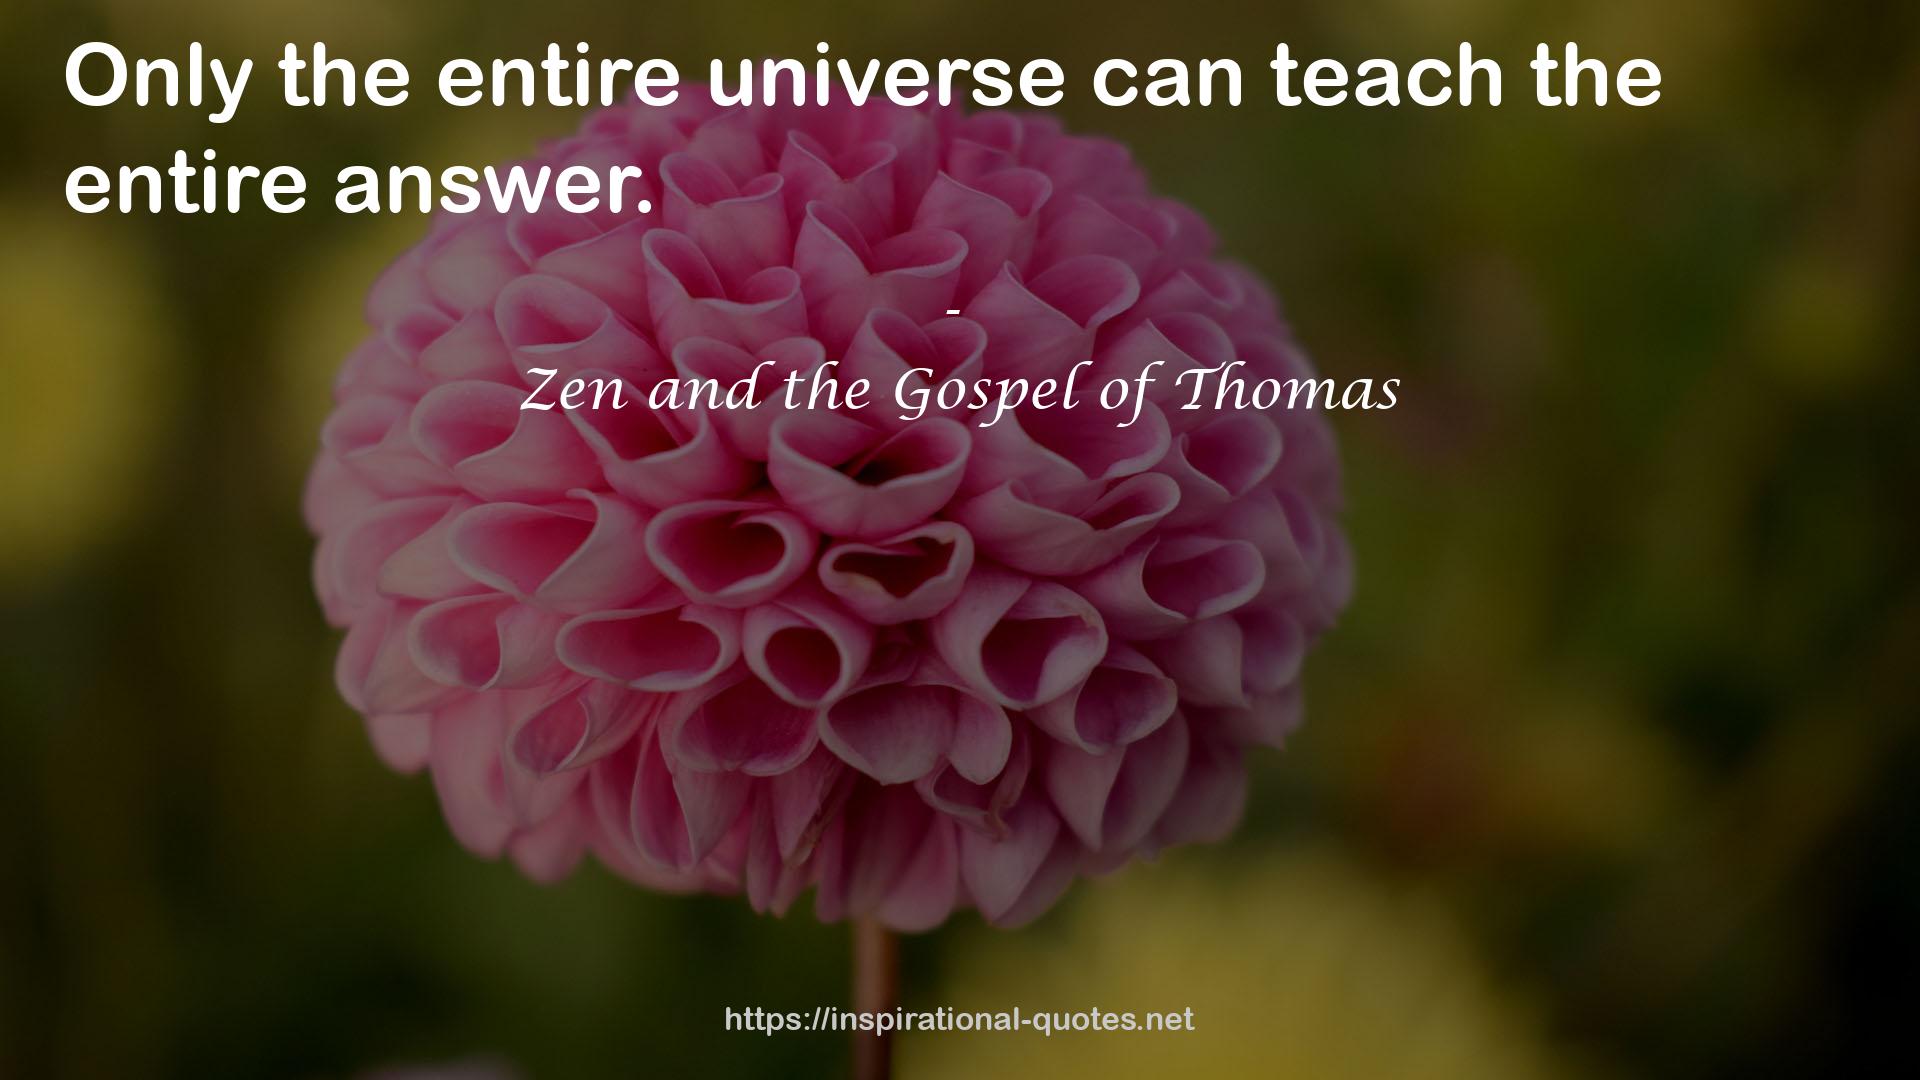 Zen and the Gospel of Thomas QUOTES